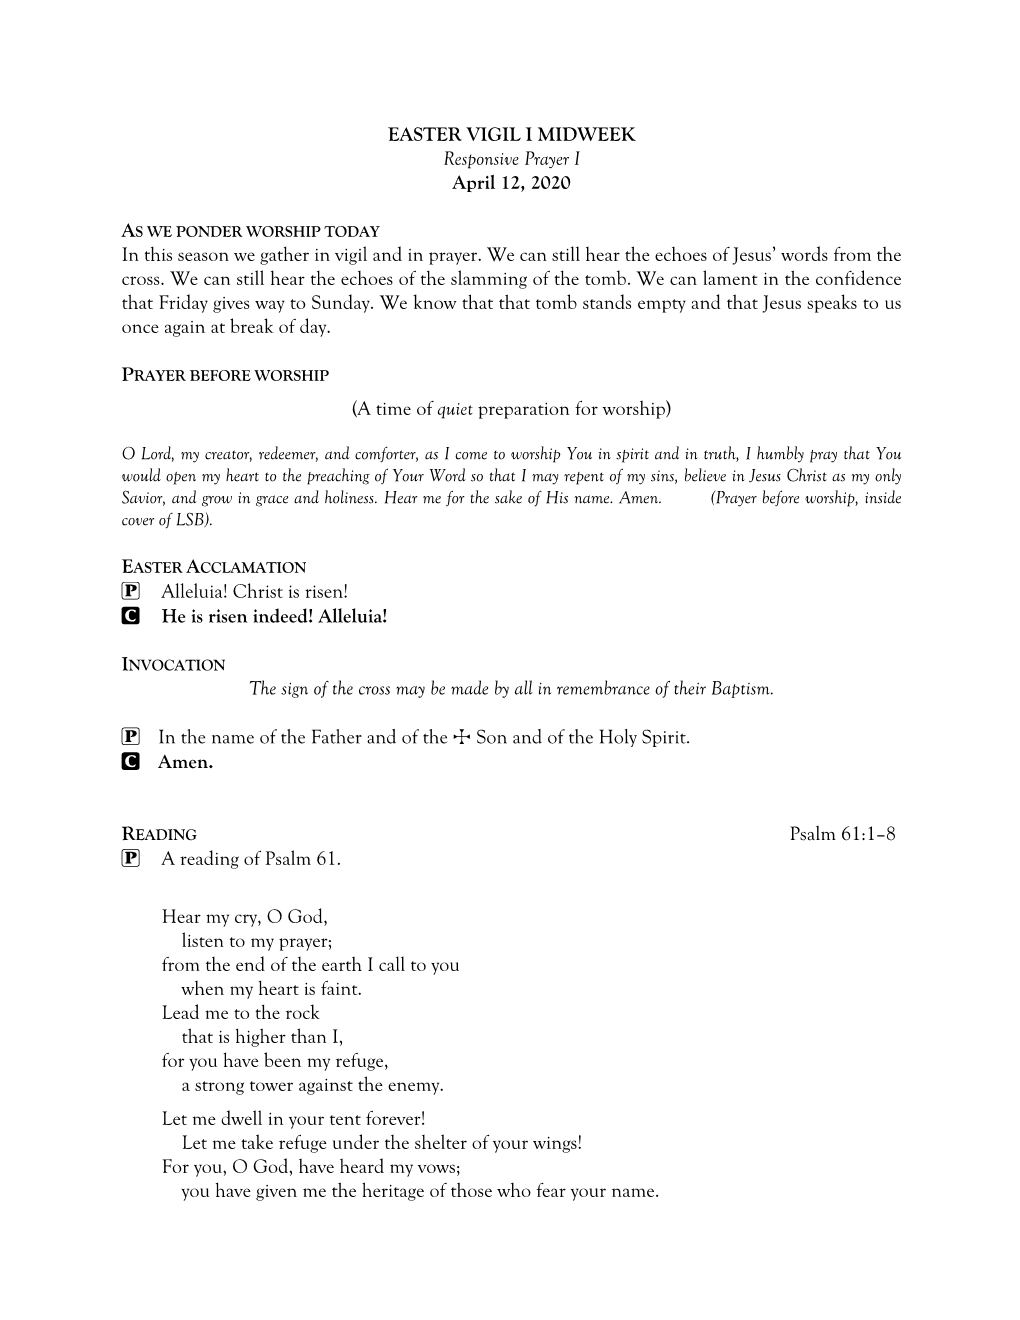 EASTER VIGIL I MIDWEEK Responsive Prayer I April 12, 2020